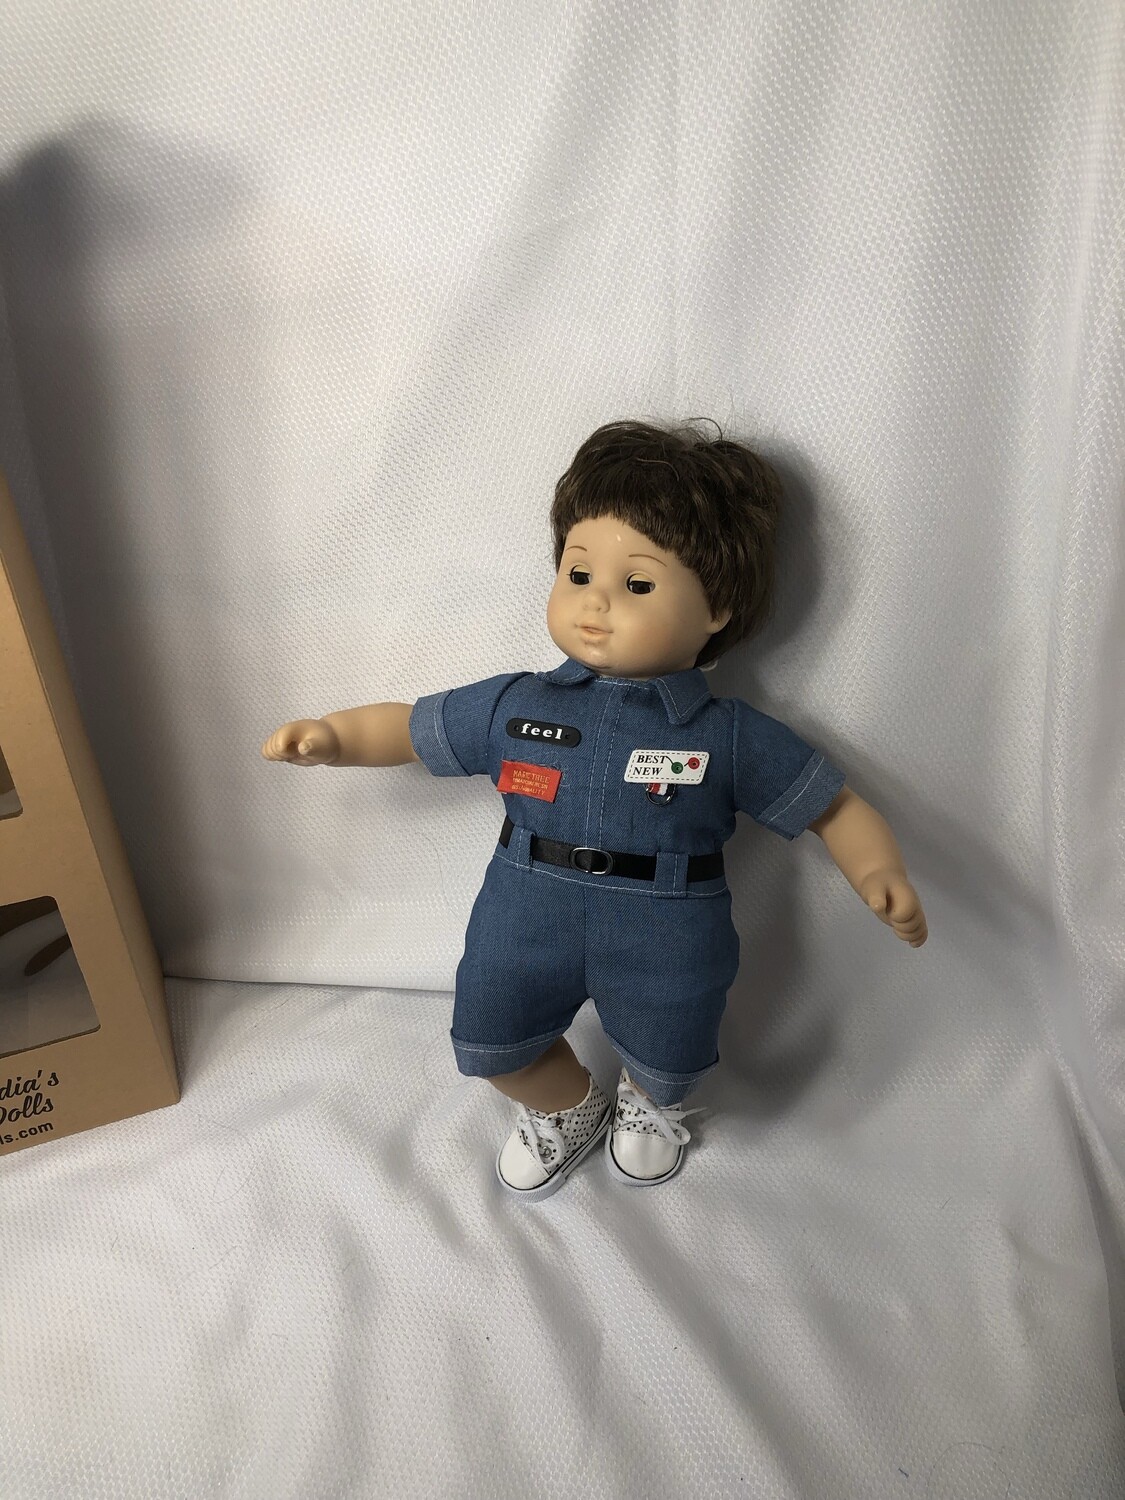 Henry: OOAK refurbished AG Doll boy doll.

